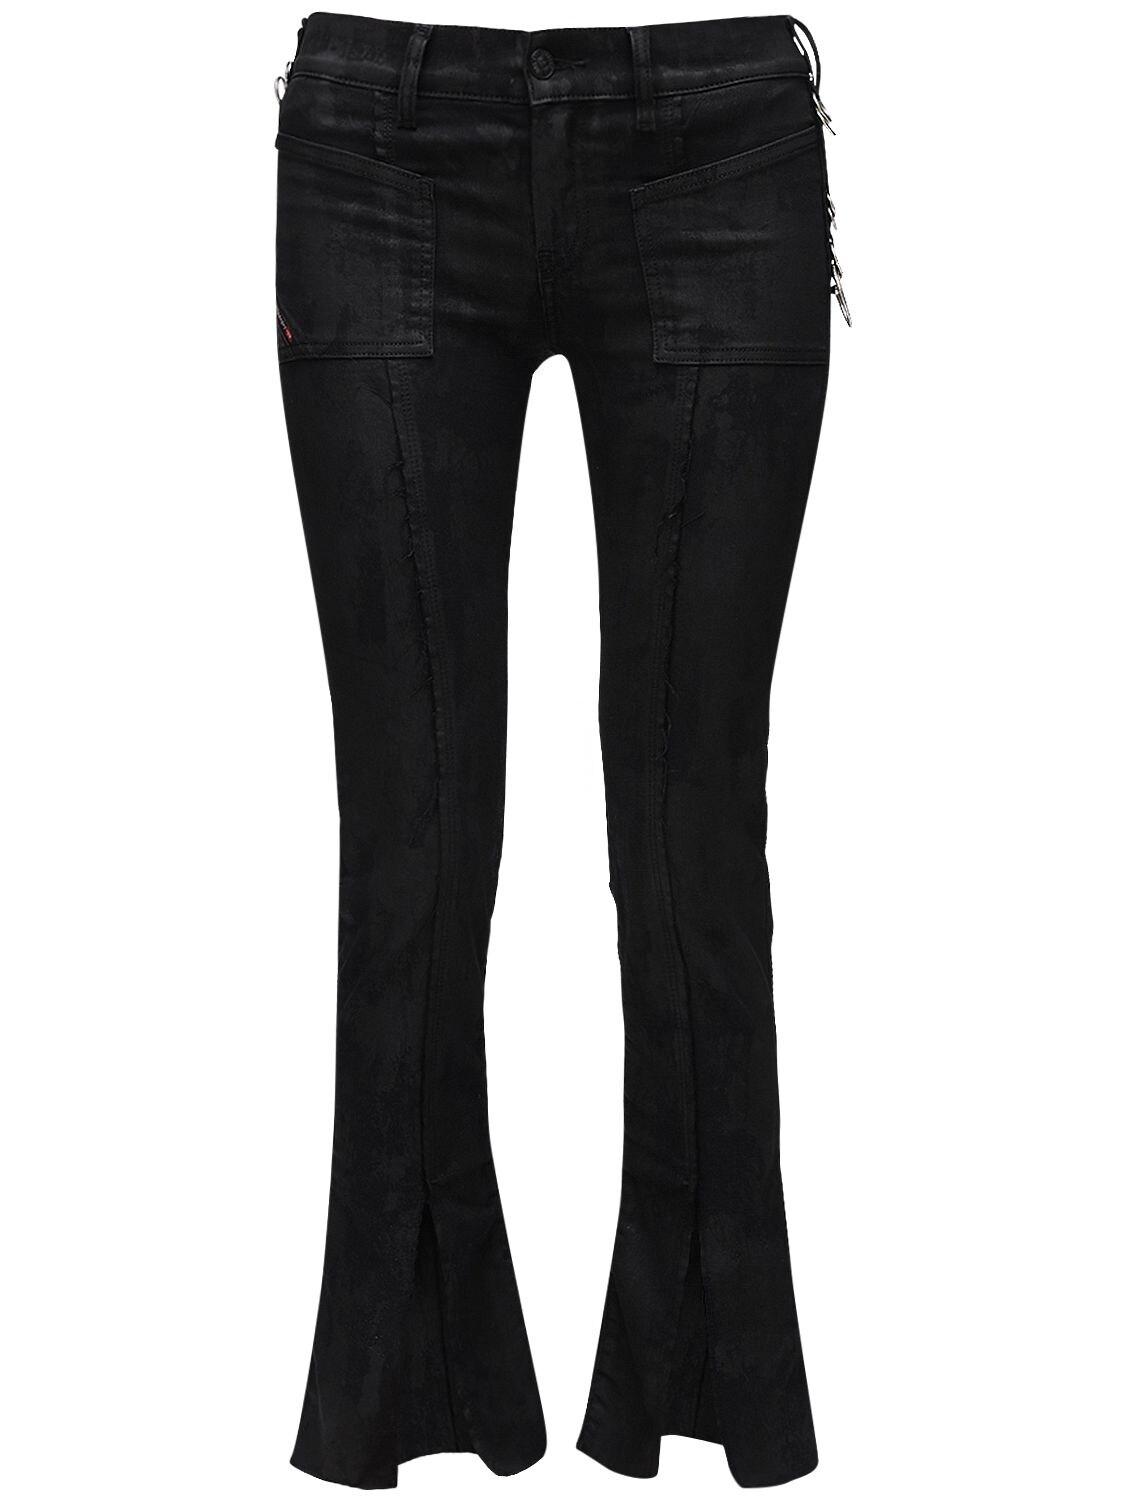 DIESEL D-slandy Coated Flared Jeans W/ Rings in Black - Lyst